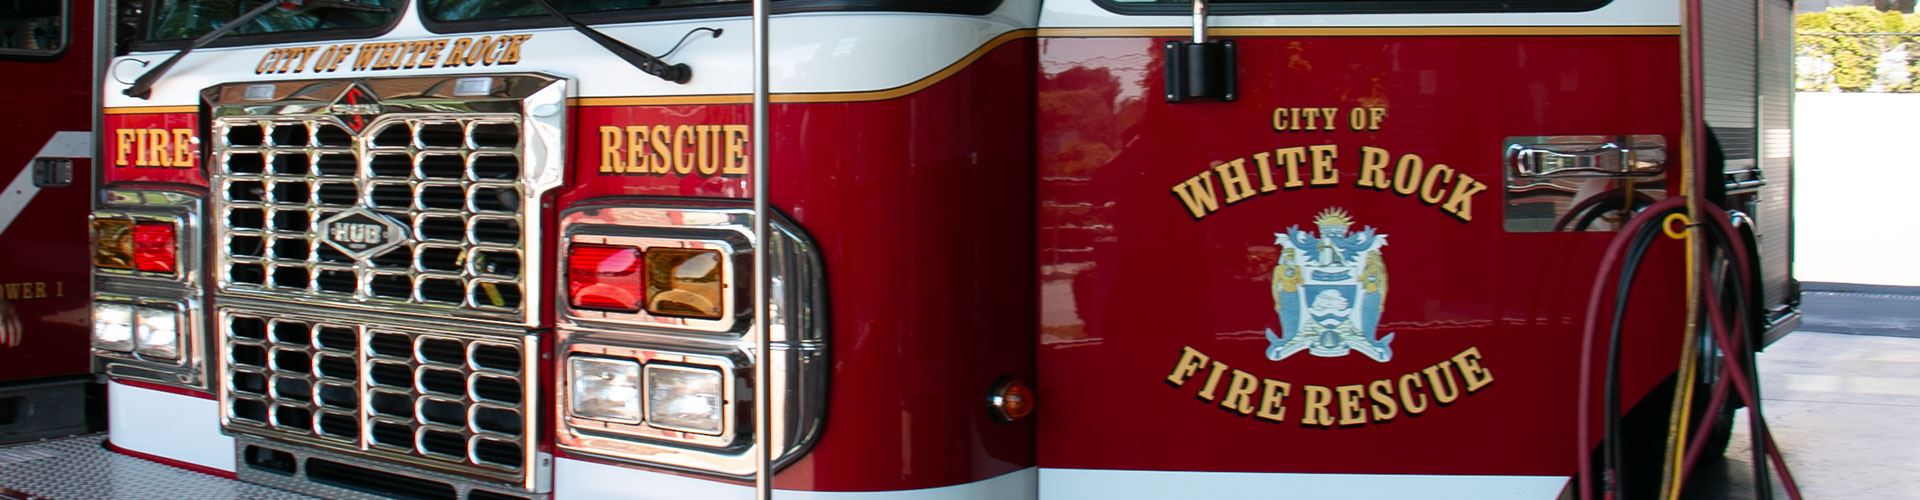 White Rock Fire Rescue crest on fire truck